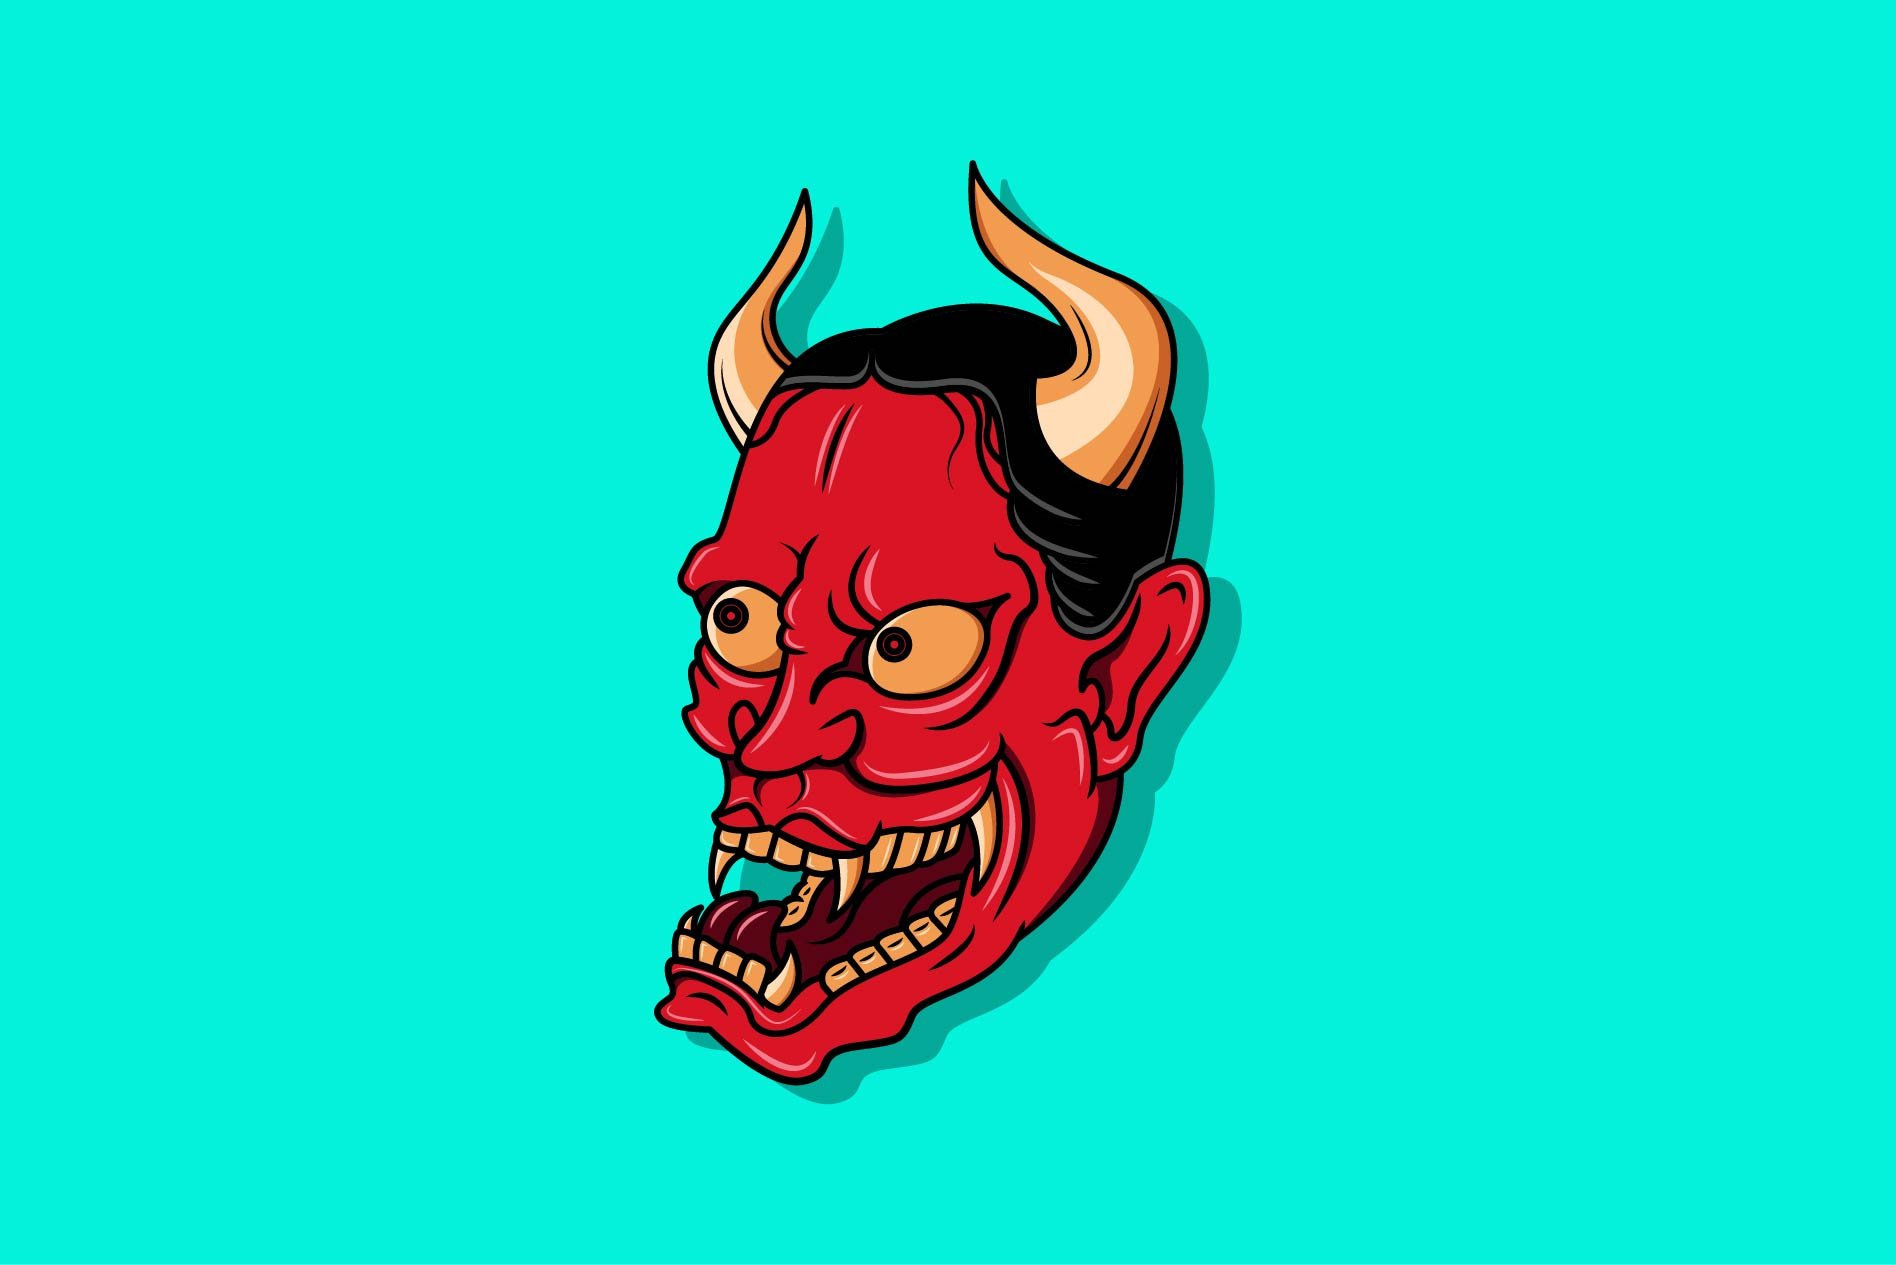 Oni japanese devil mask #30 cover image.